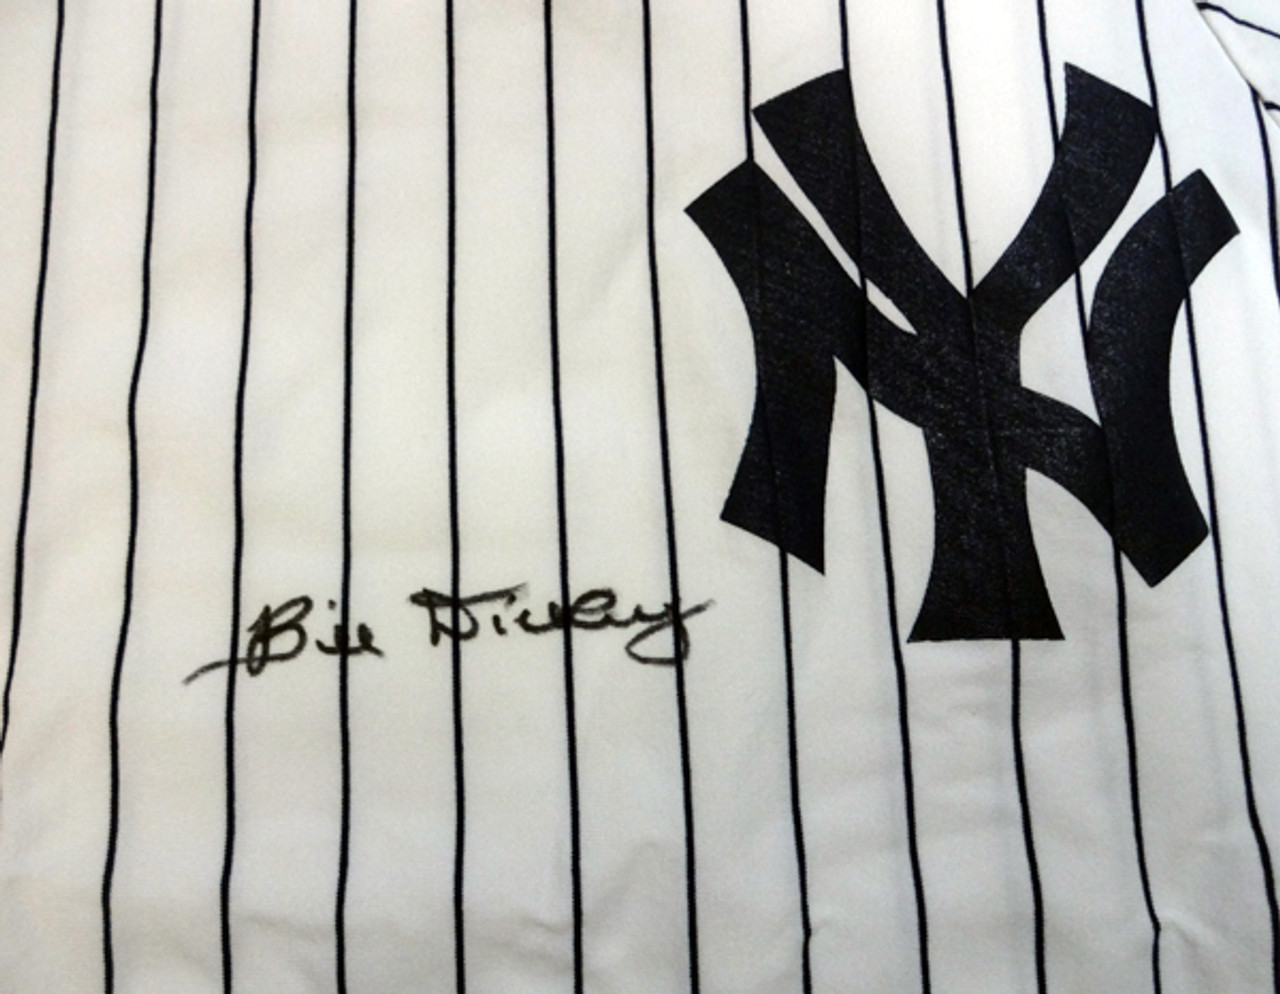 New York Yankees Ben Chapman Autographed White Jersey PSA/DNA #W07959 -  Mill Creek Sports